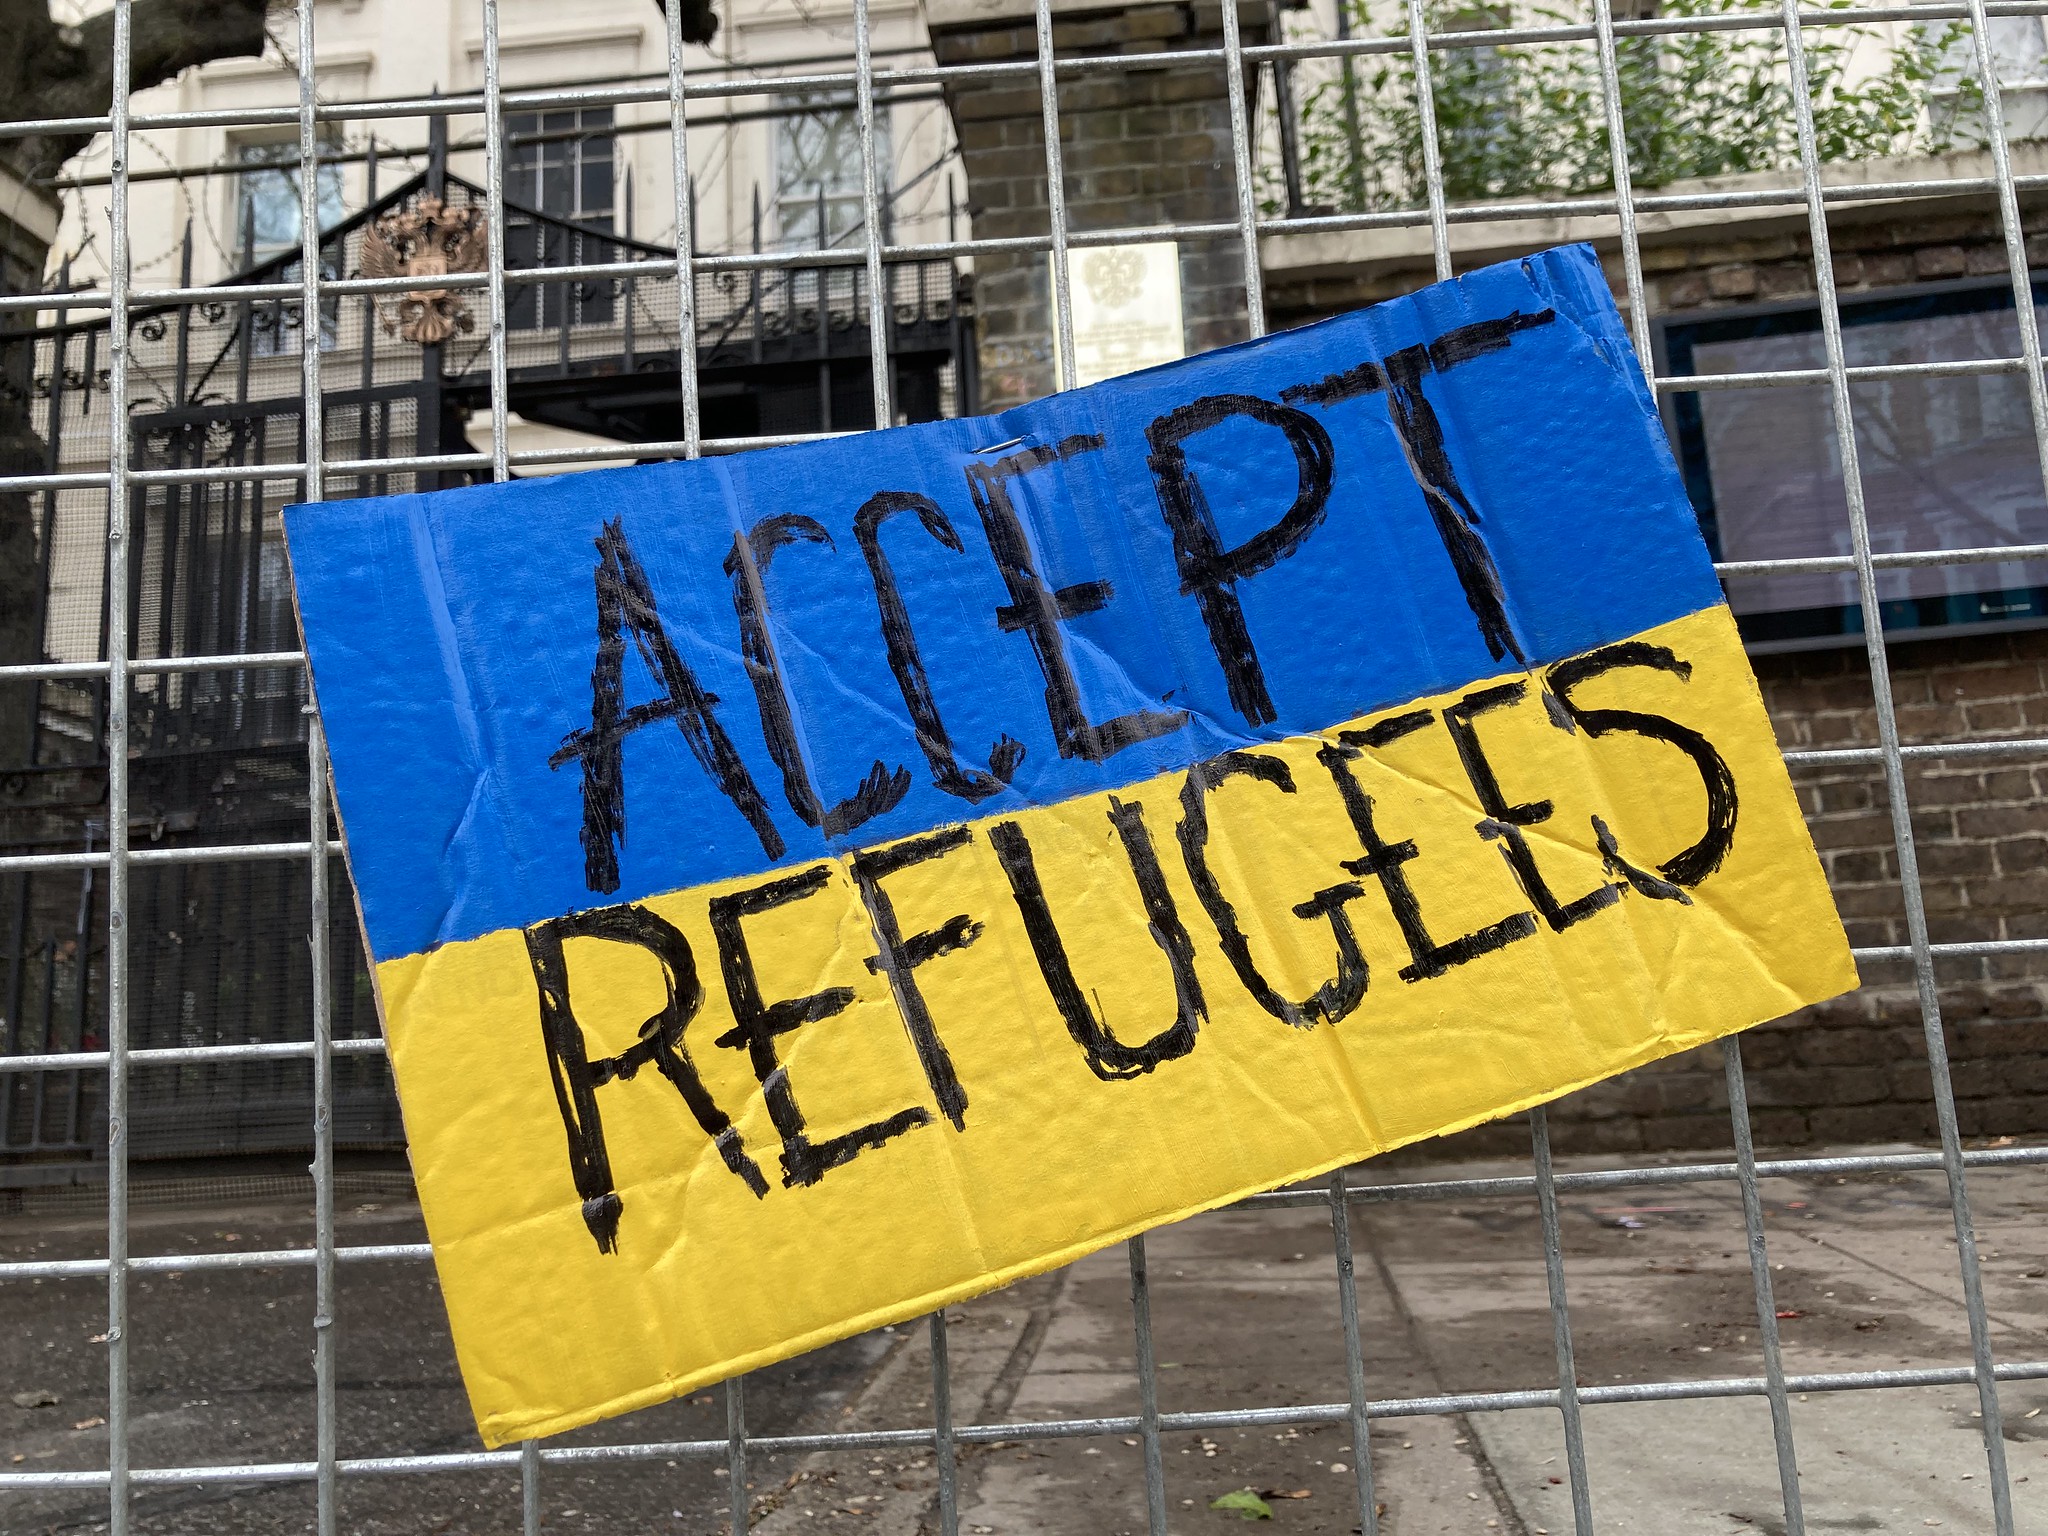 Надпись "Принимаем беженцев". Фото © Flickr / Matt Brown